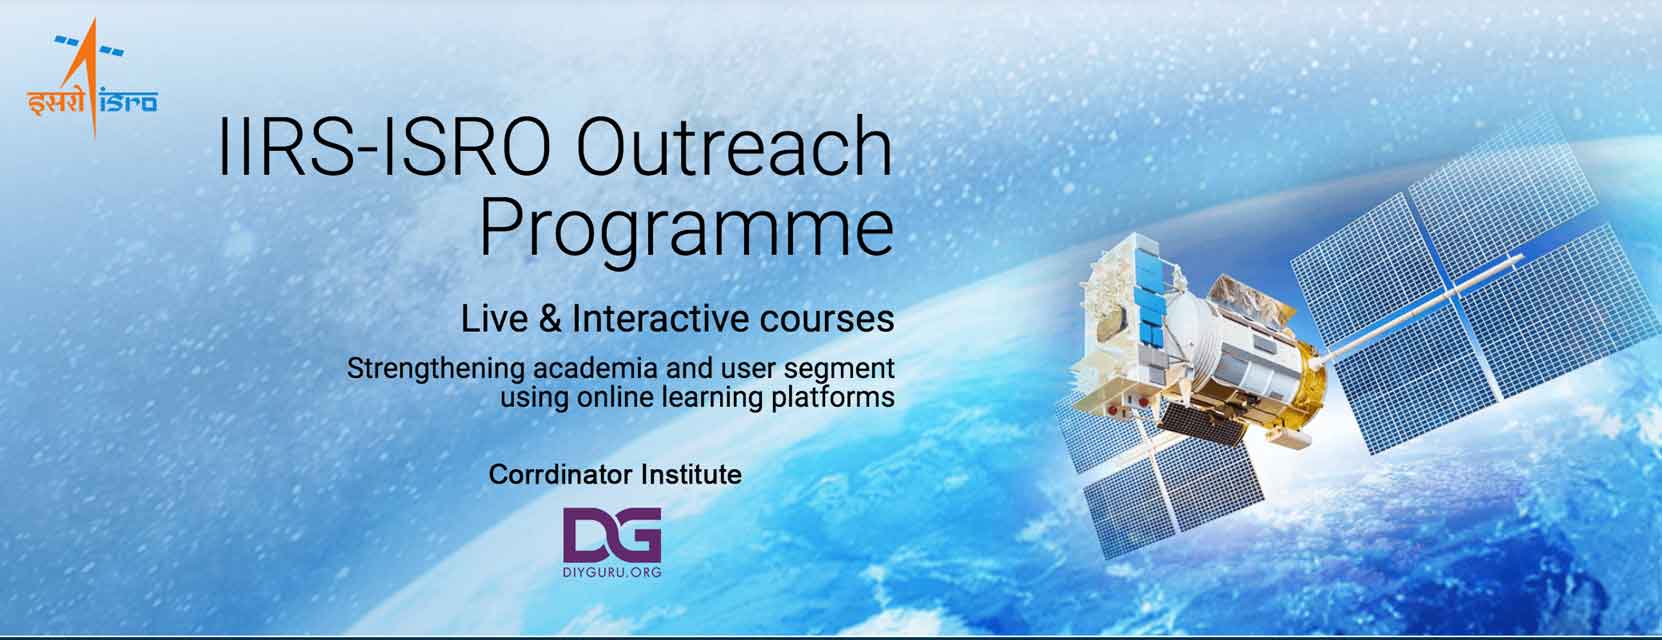 Guidelines to Join ISRO Online Course through DIYguru at IIRS